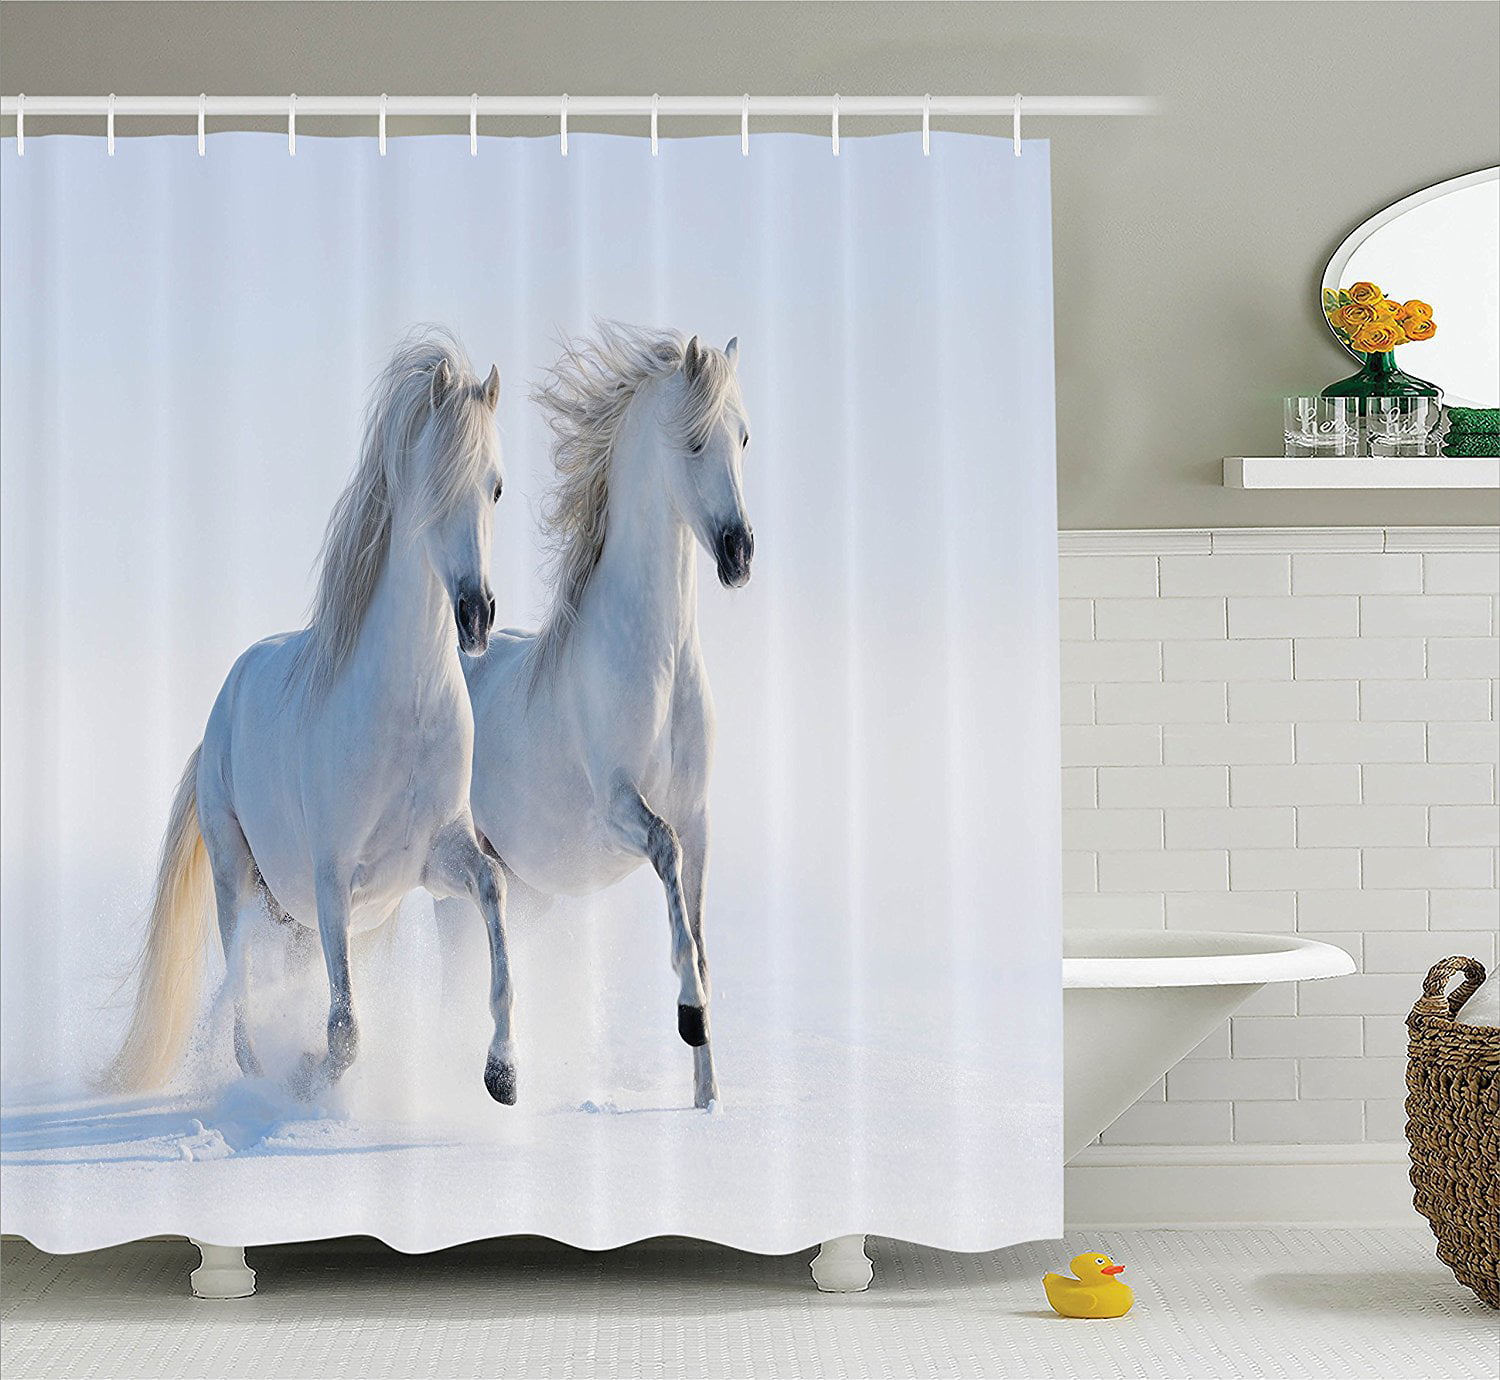 Watercolor Cottage Flowers Green Grass Horses Shower Curtain Set Bathroom Decor 